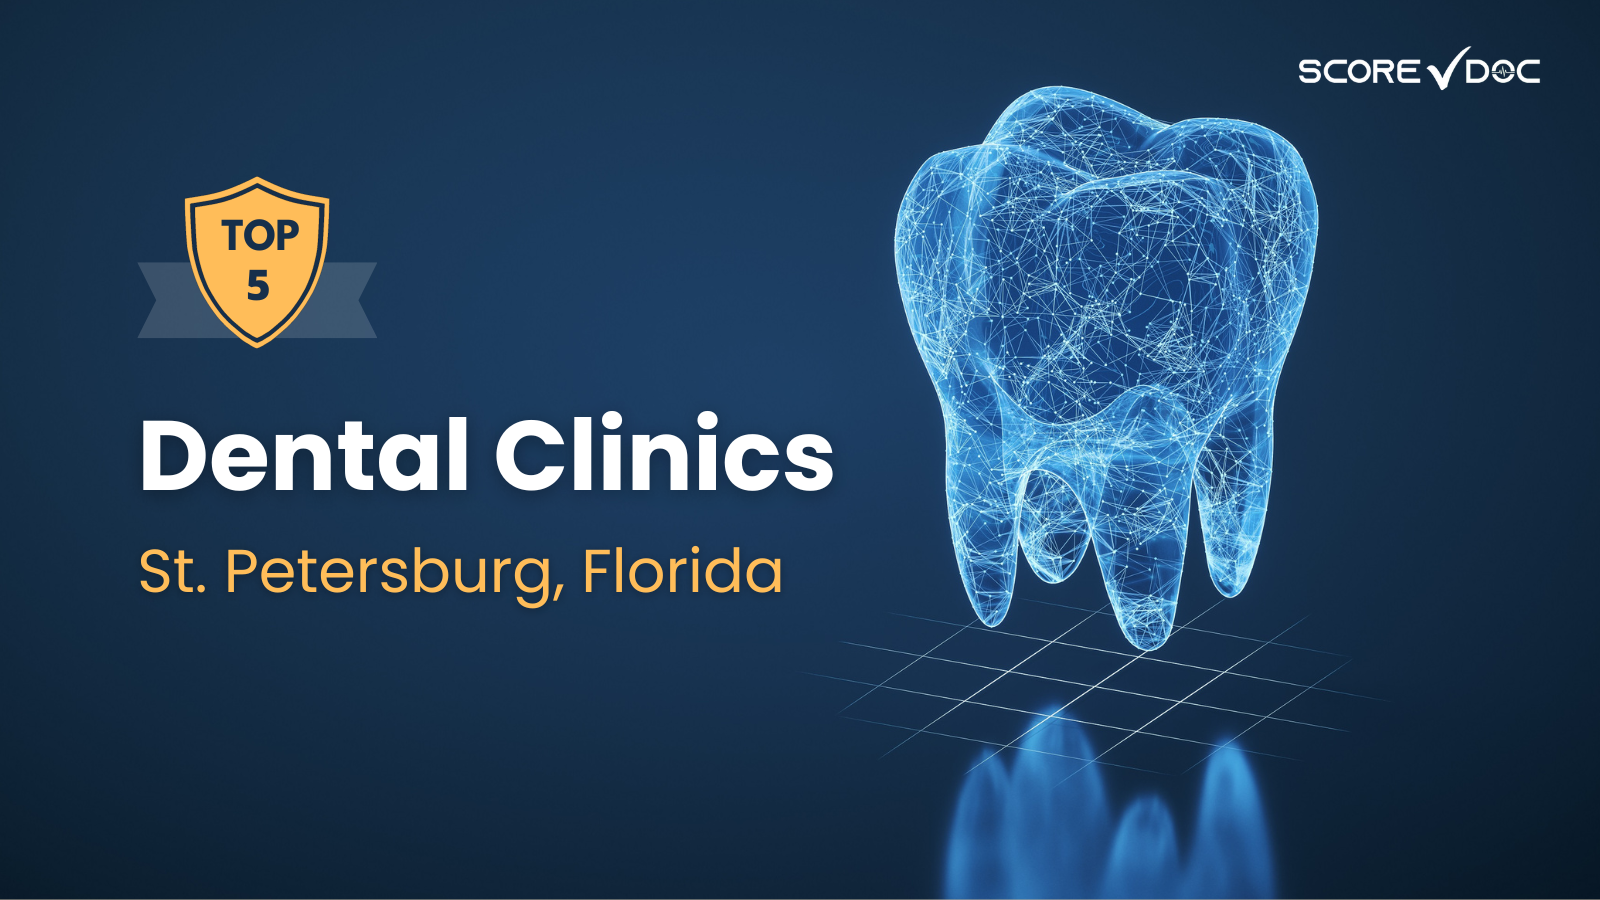 Top Rated Dental Clinics in Saint Petersburg, Florida